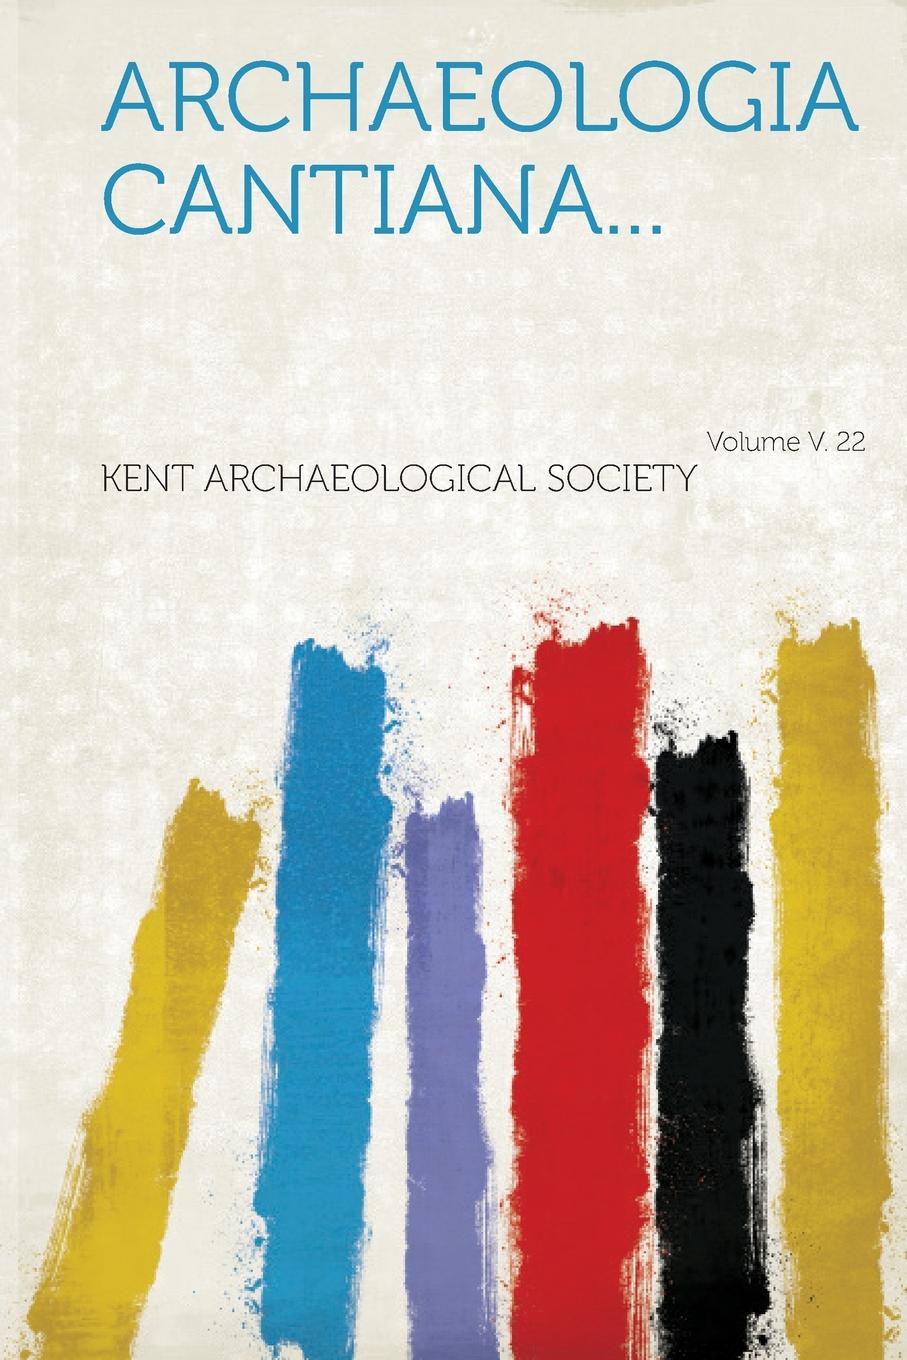 Archaeologia cantiana... Volume v. 22